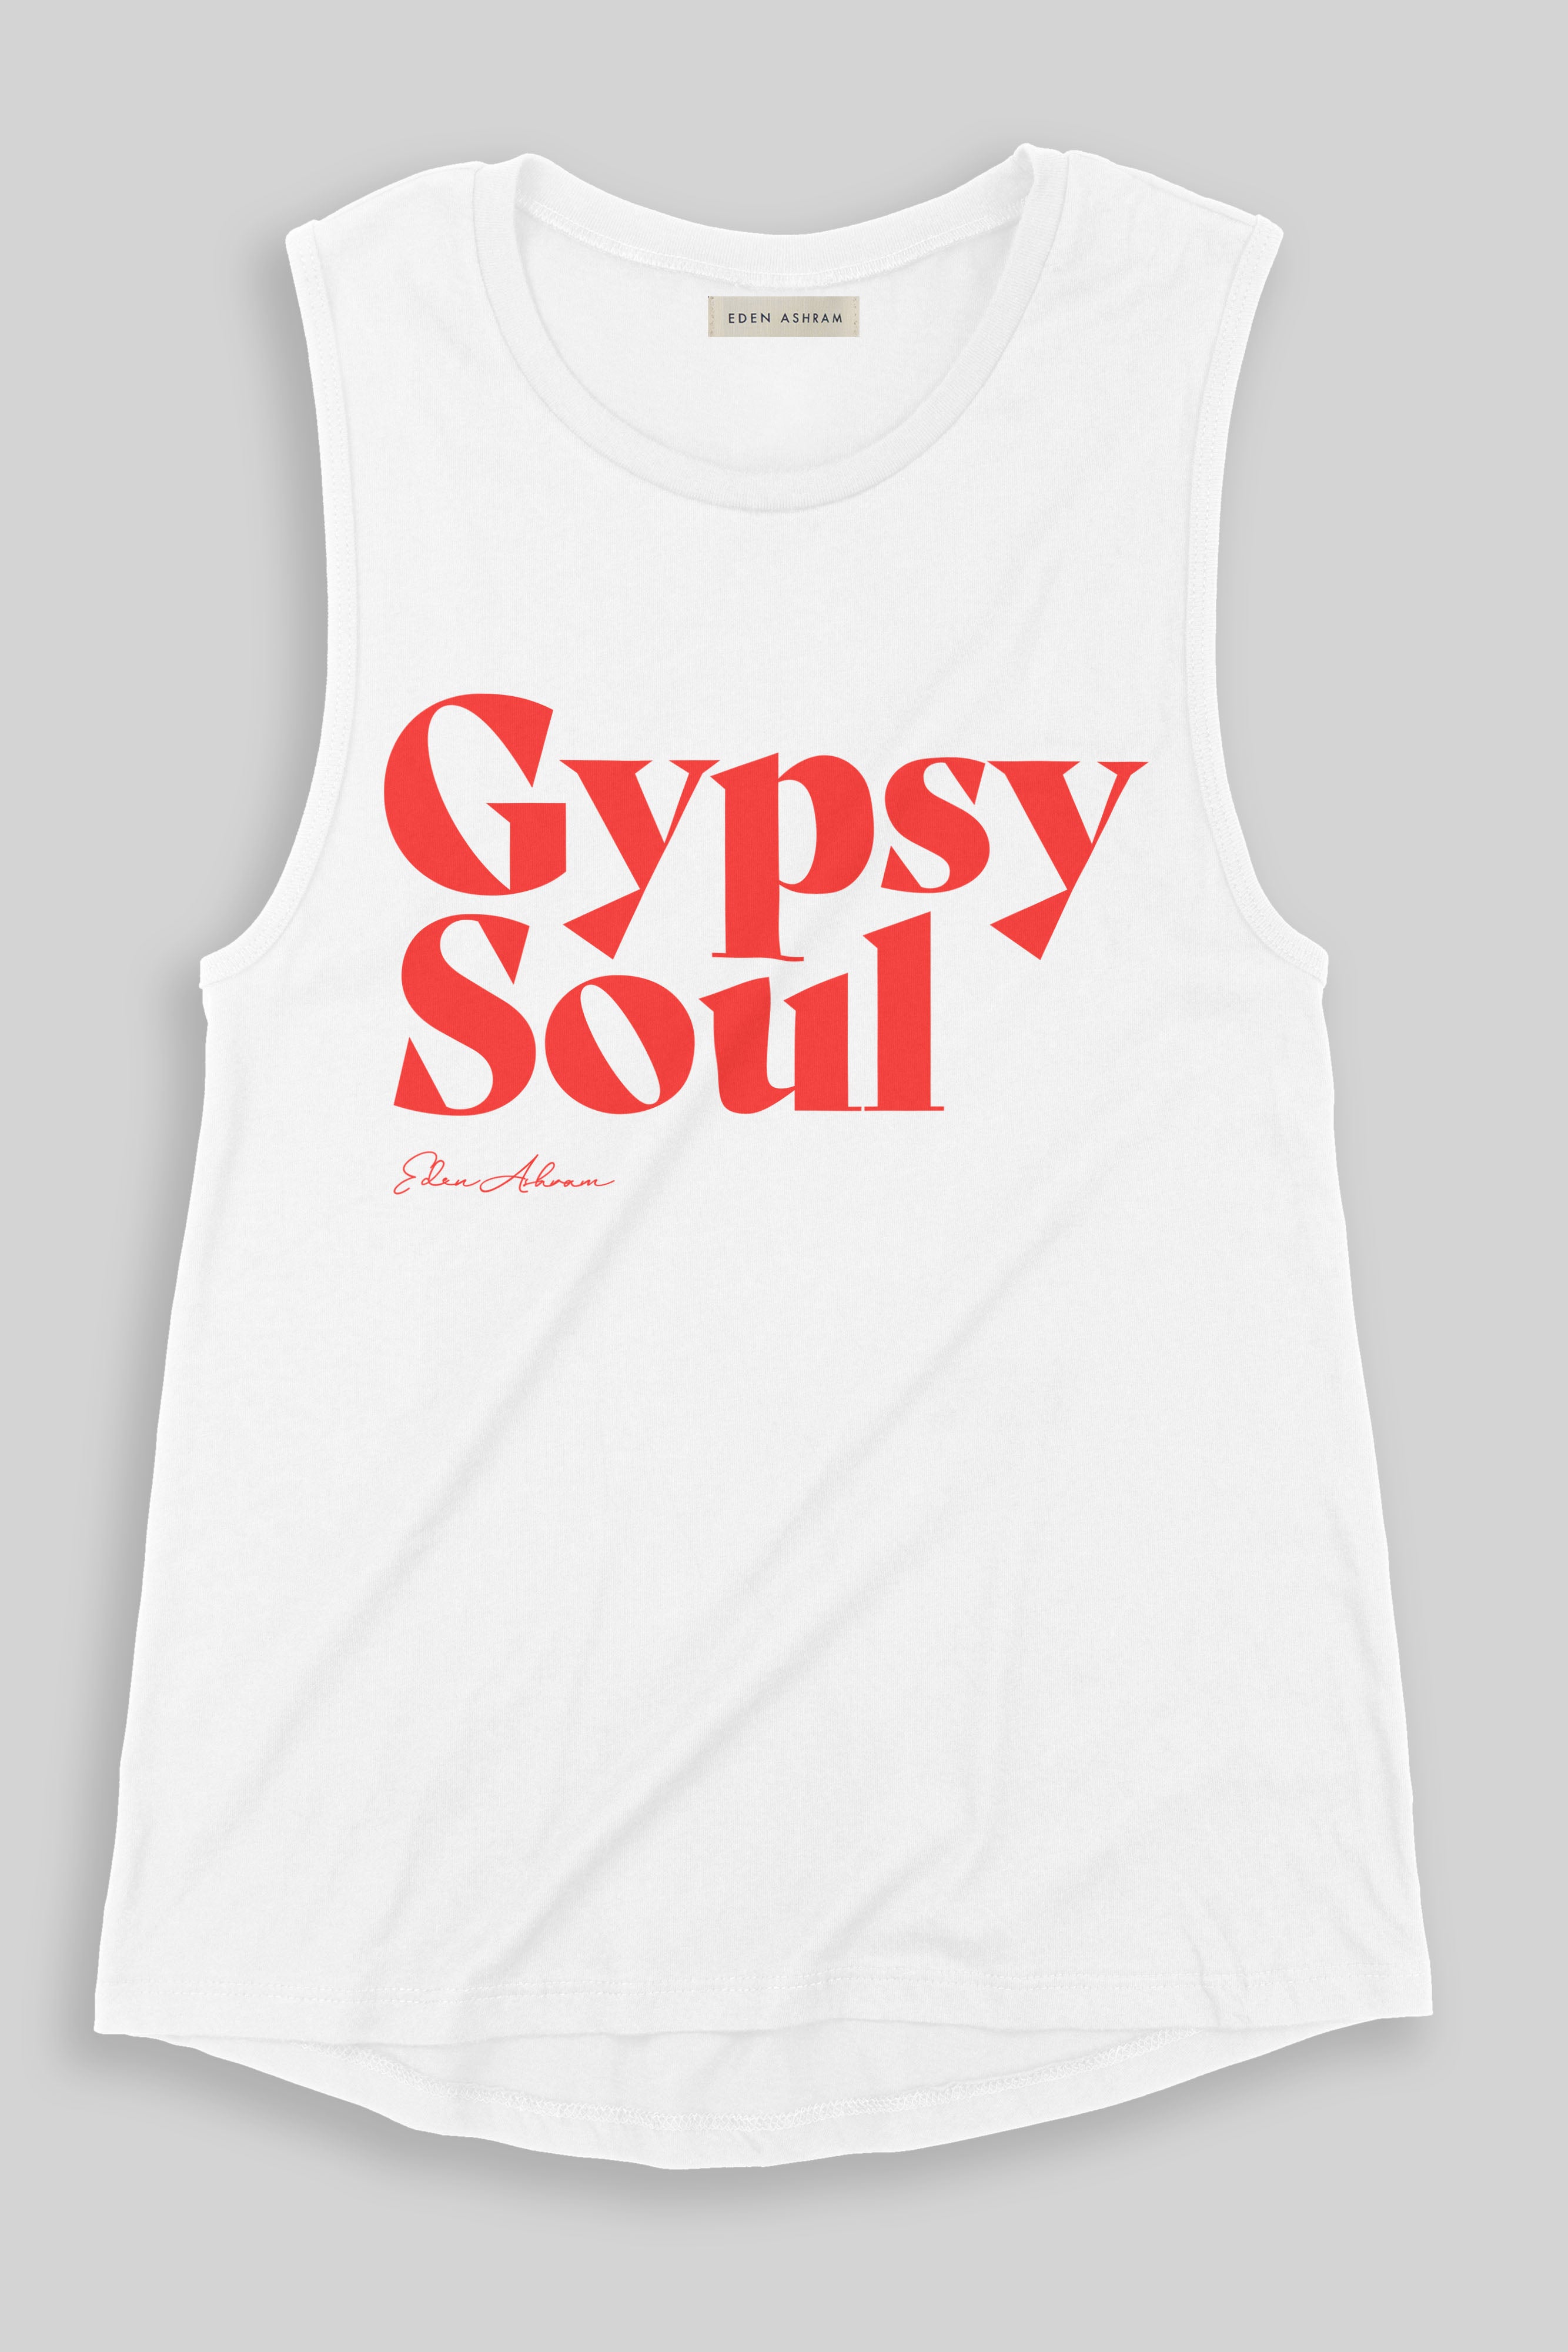 EDEN ASHRAM Gypsy Soul Premium Jersey Muscle Tank Vintage White